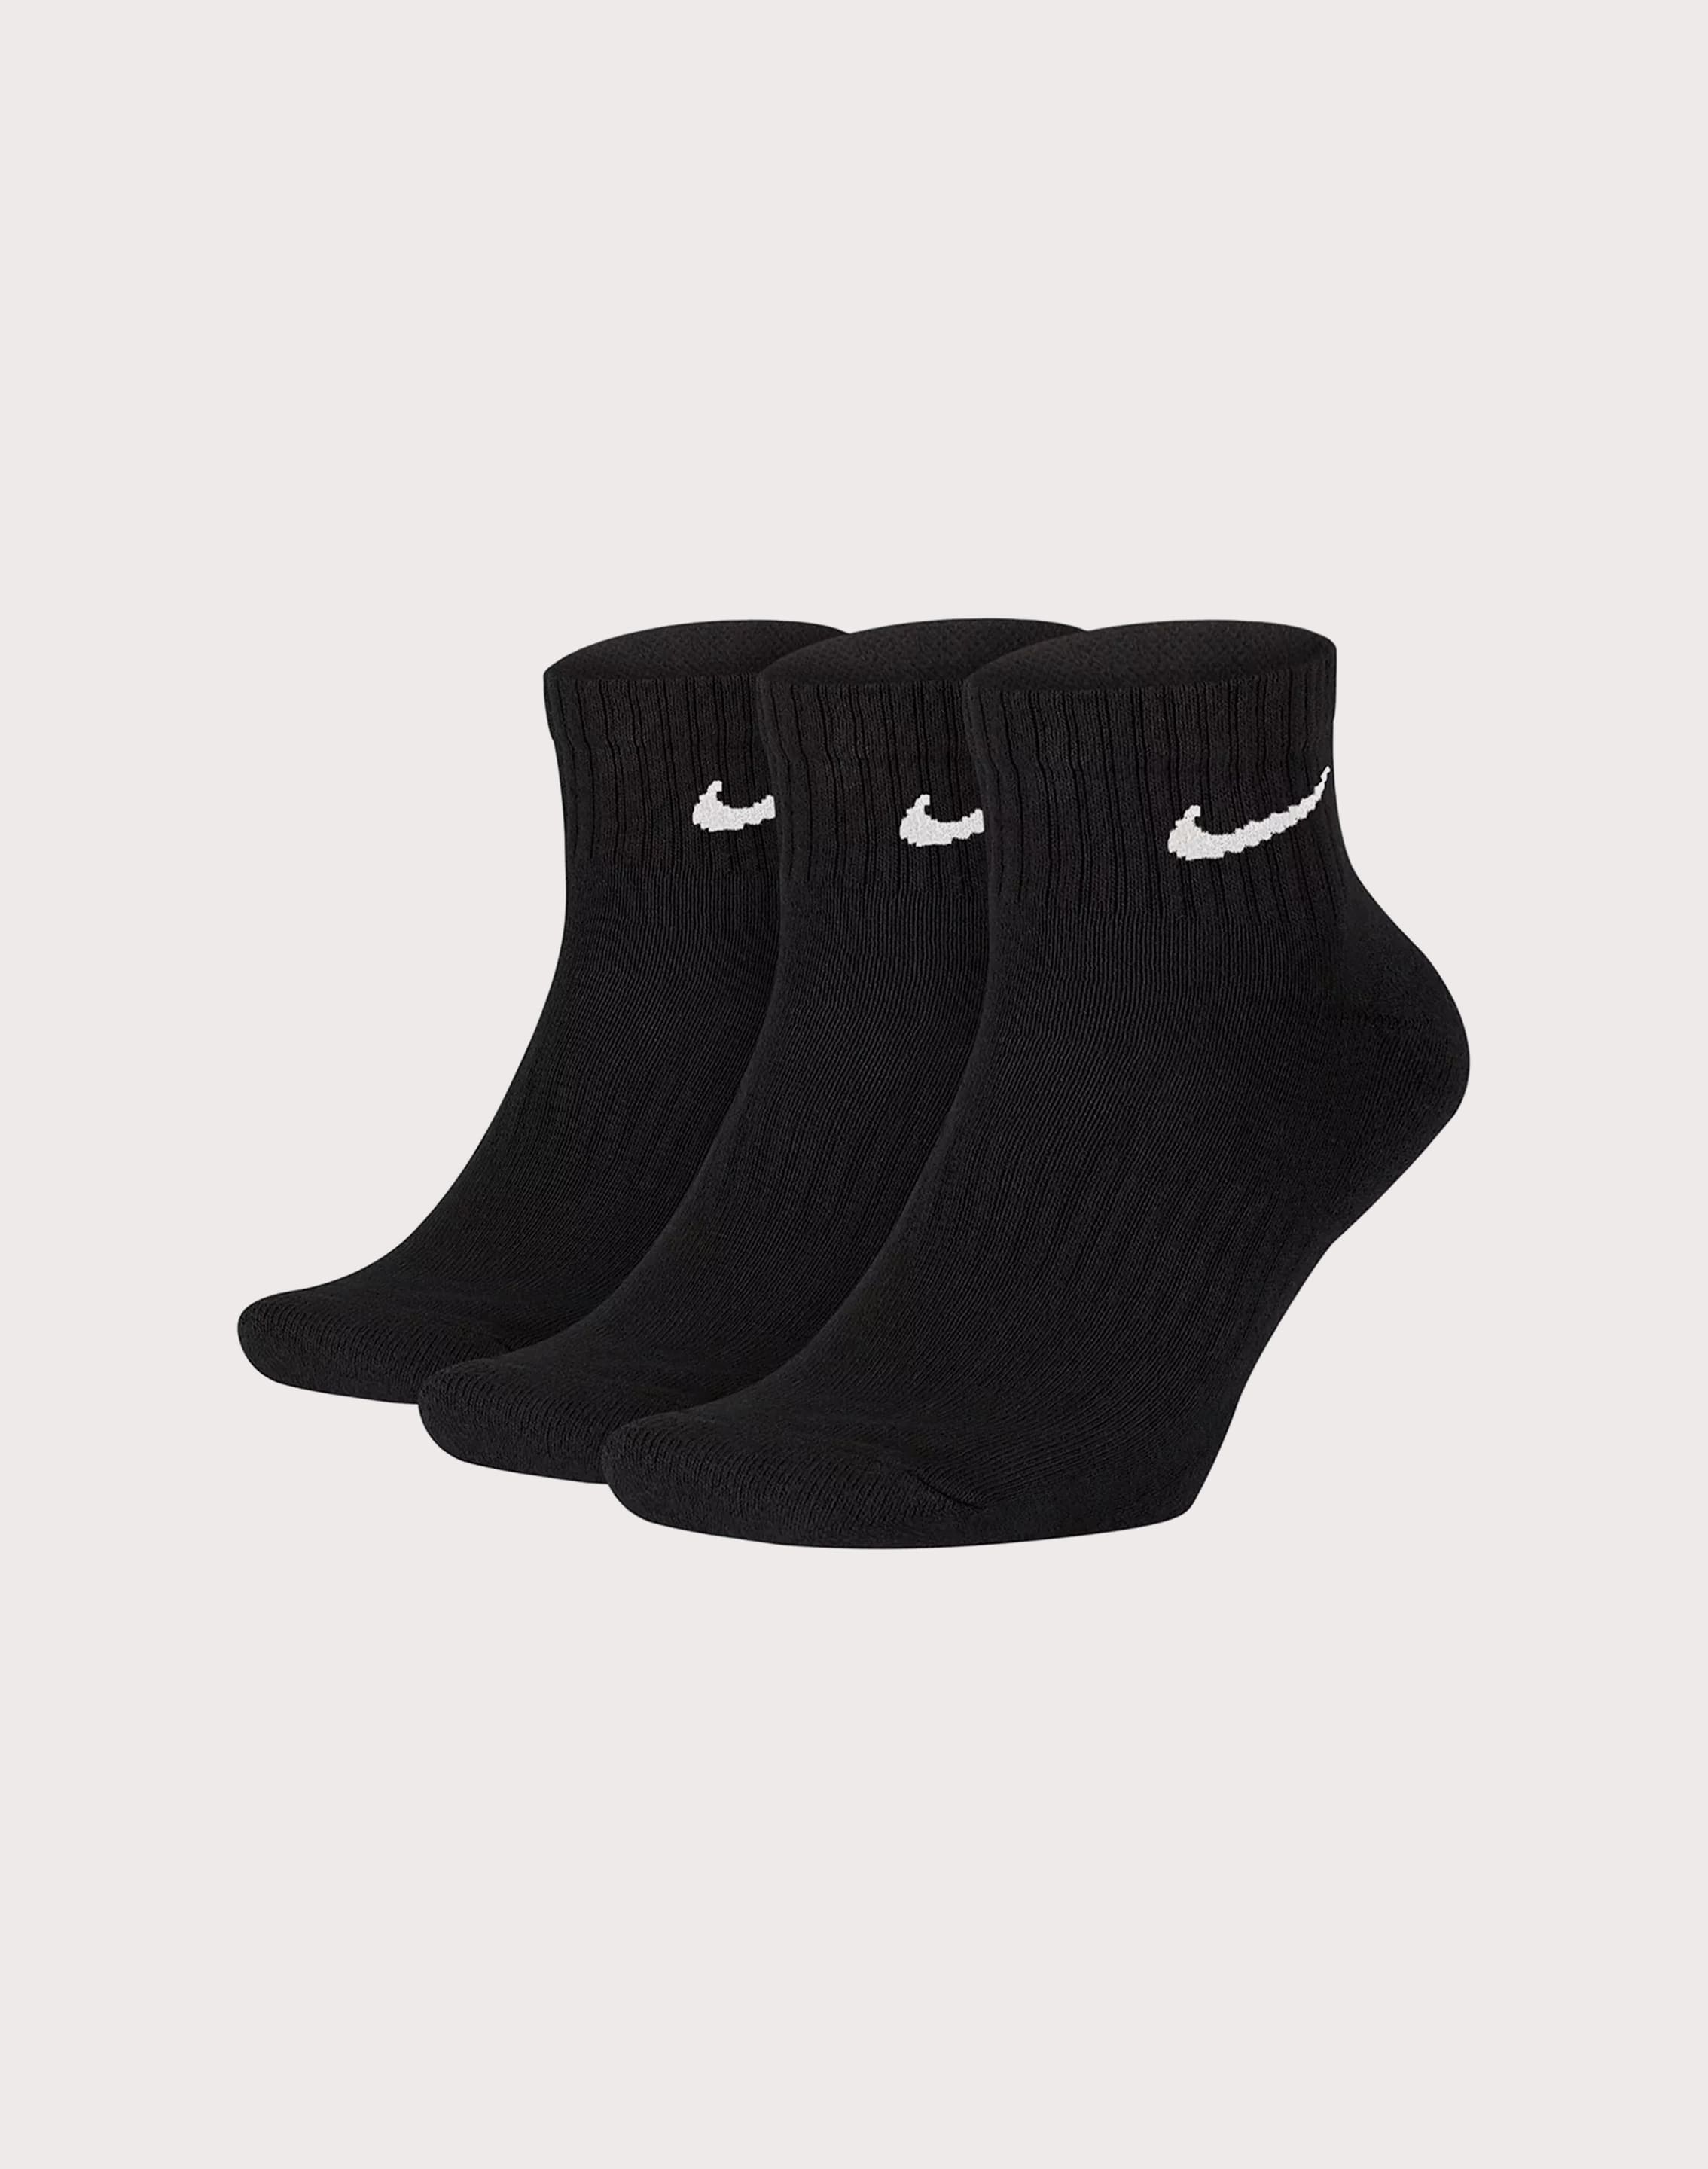 Nike 3 Pack Medium Everyday Cushion Ankle Socks (Black)